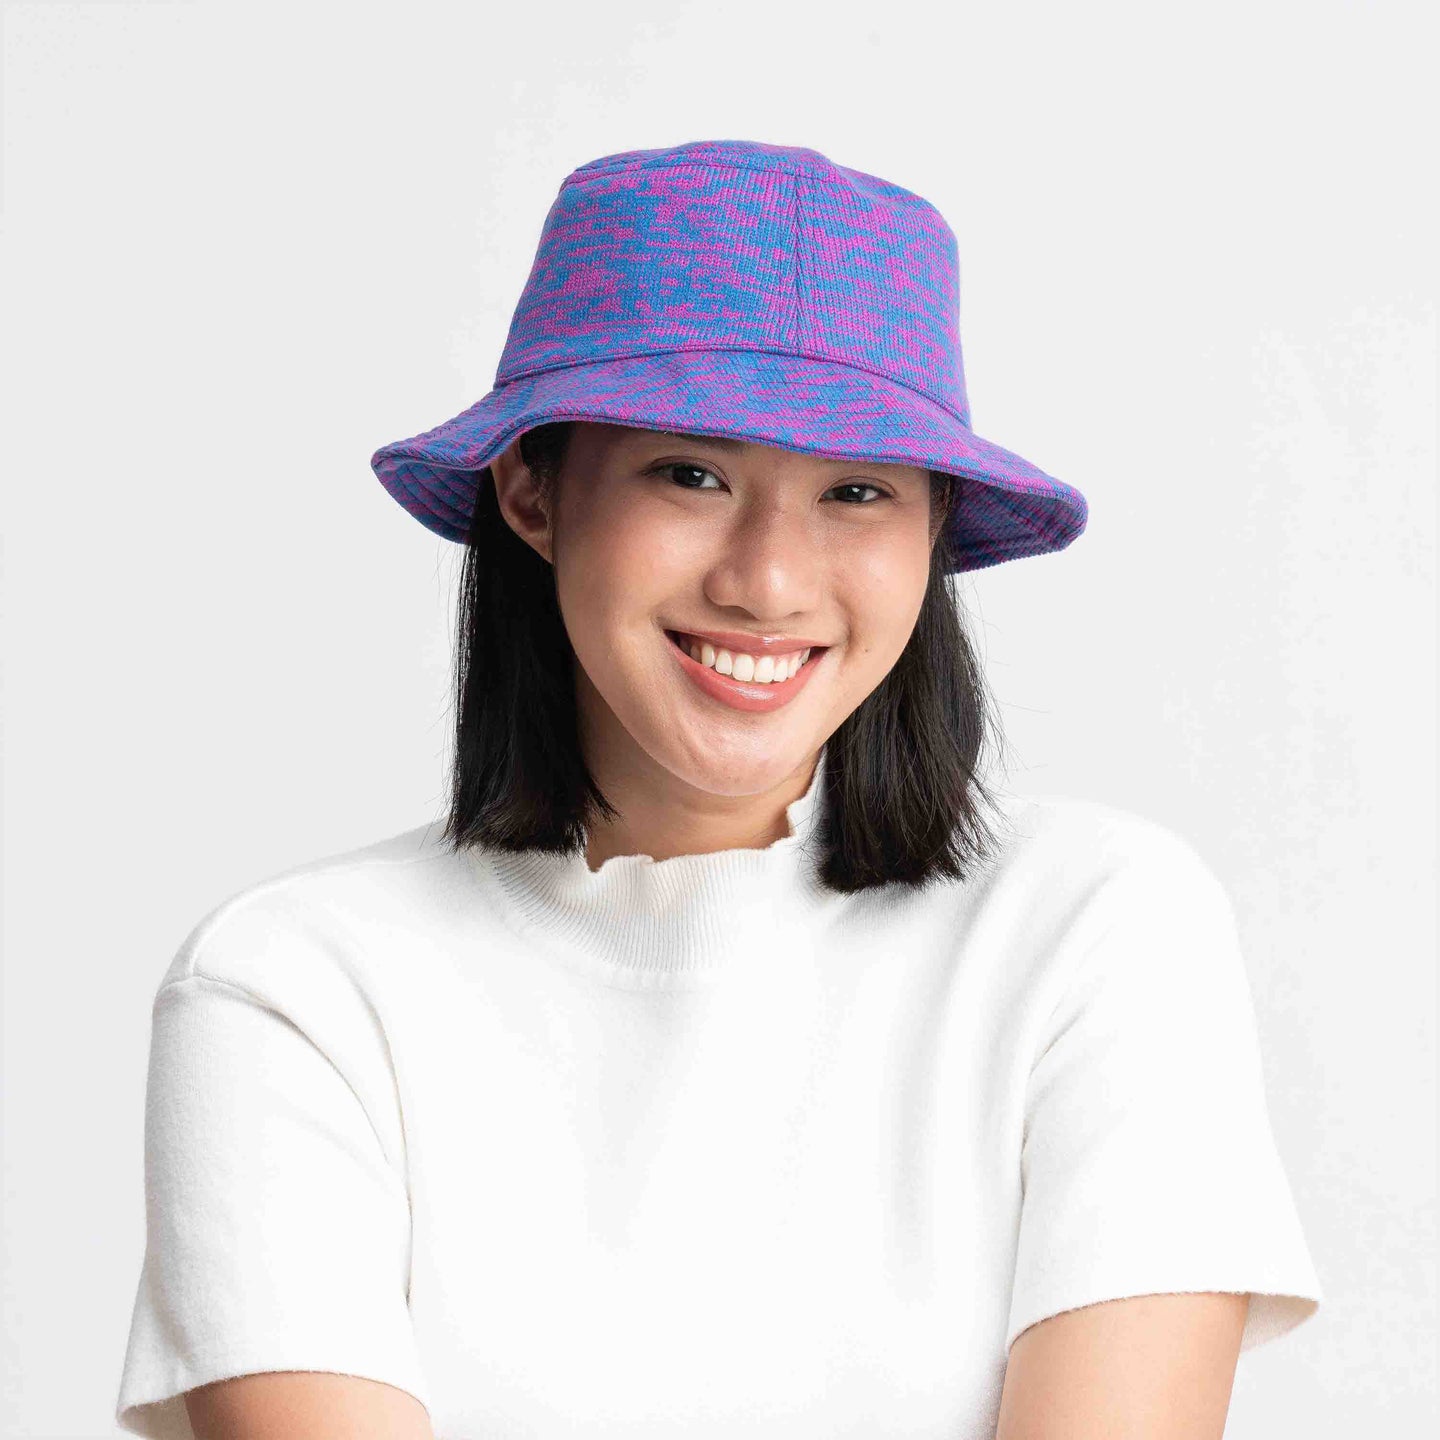 Twist Bucket Knit Hat Marl Upcycled Soft